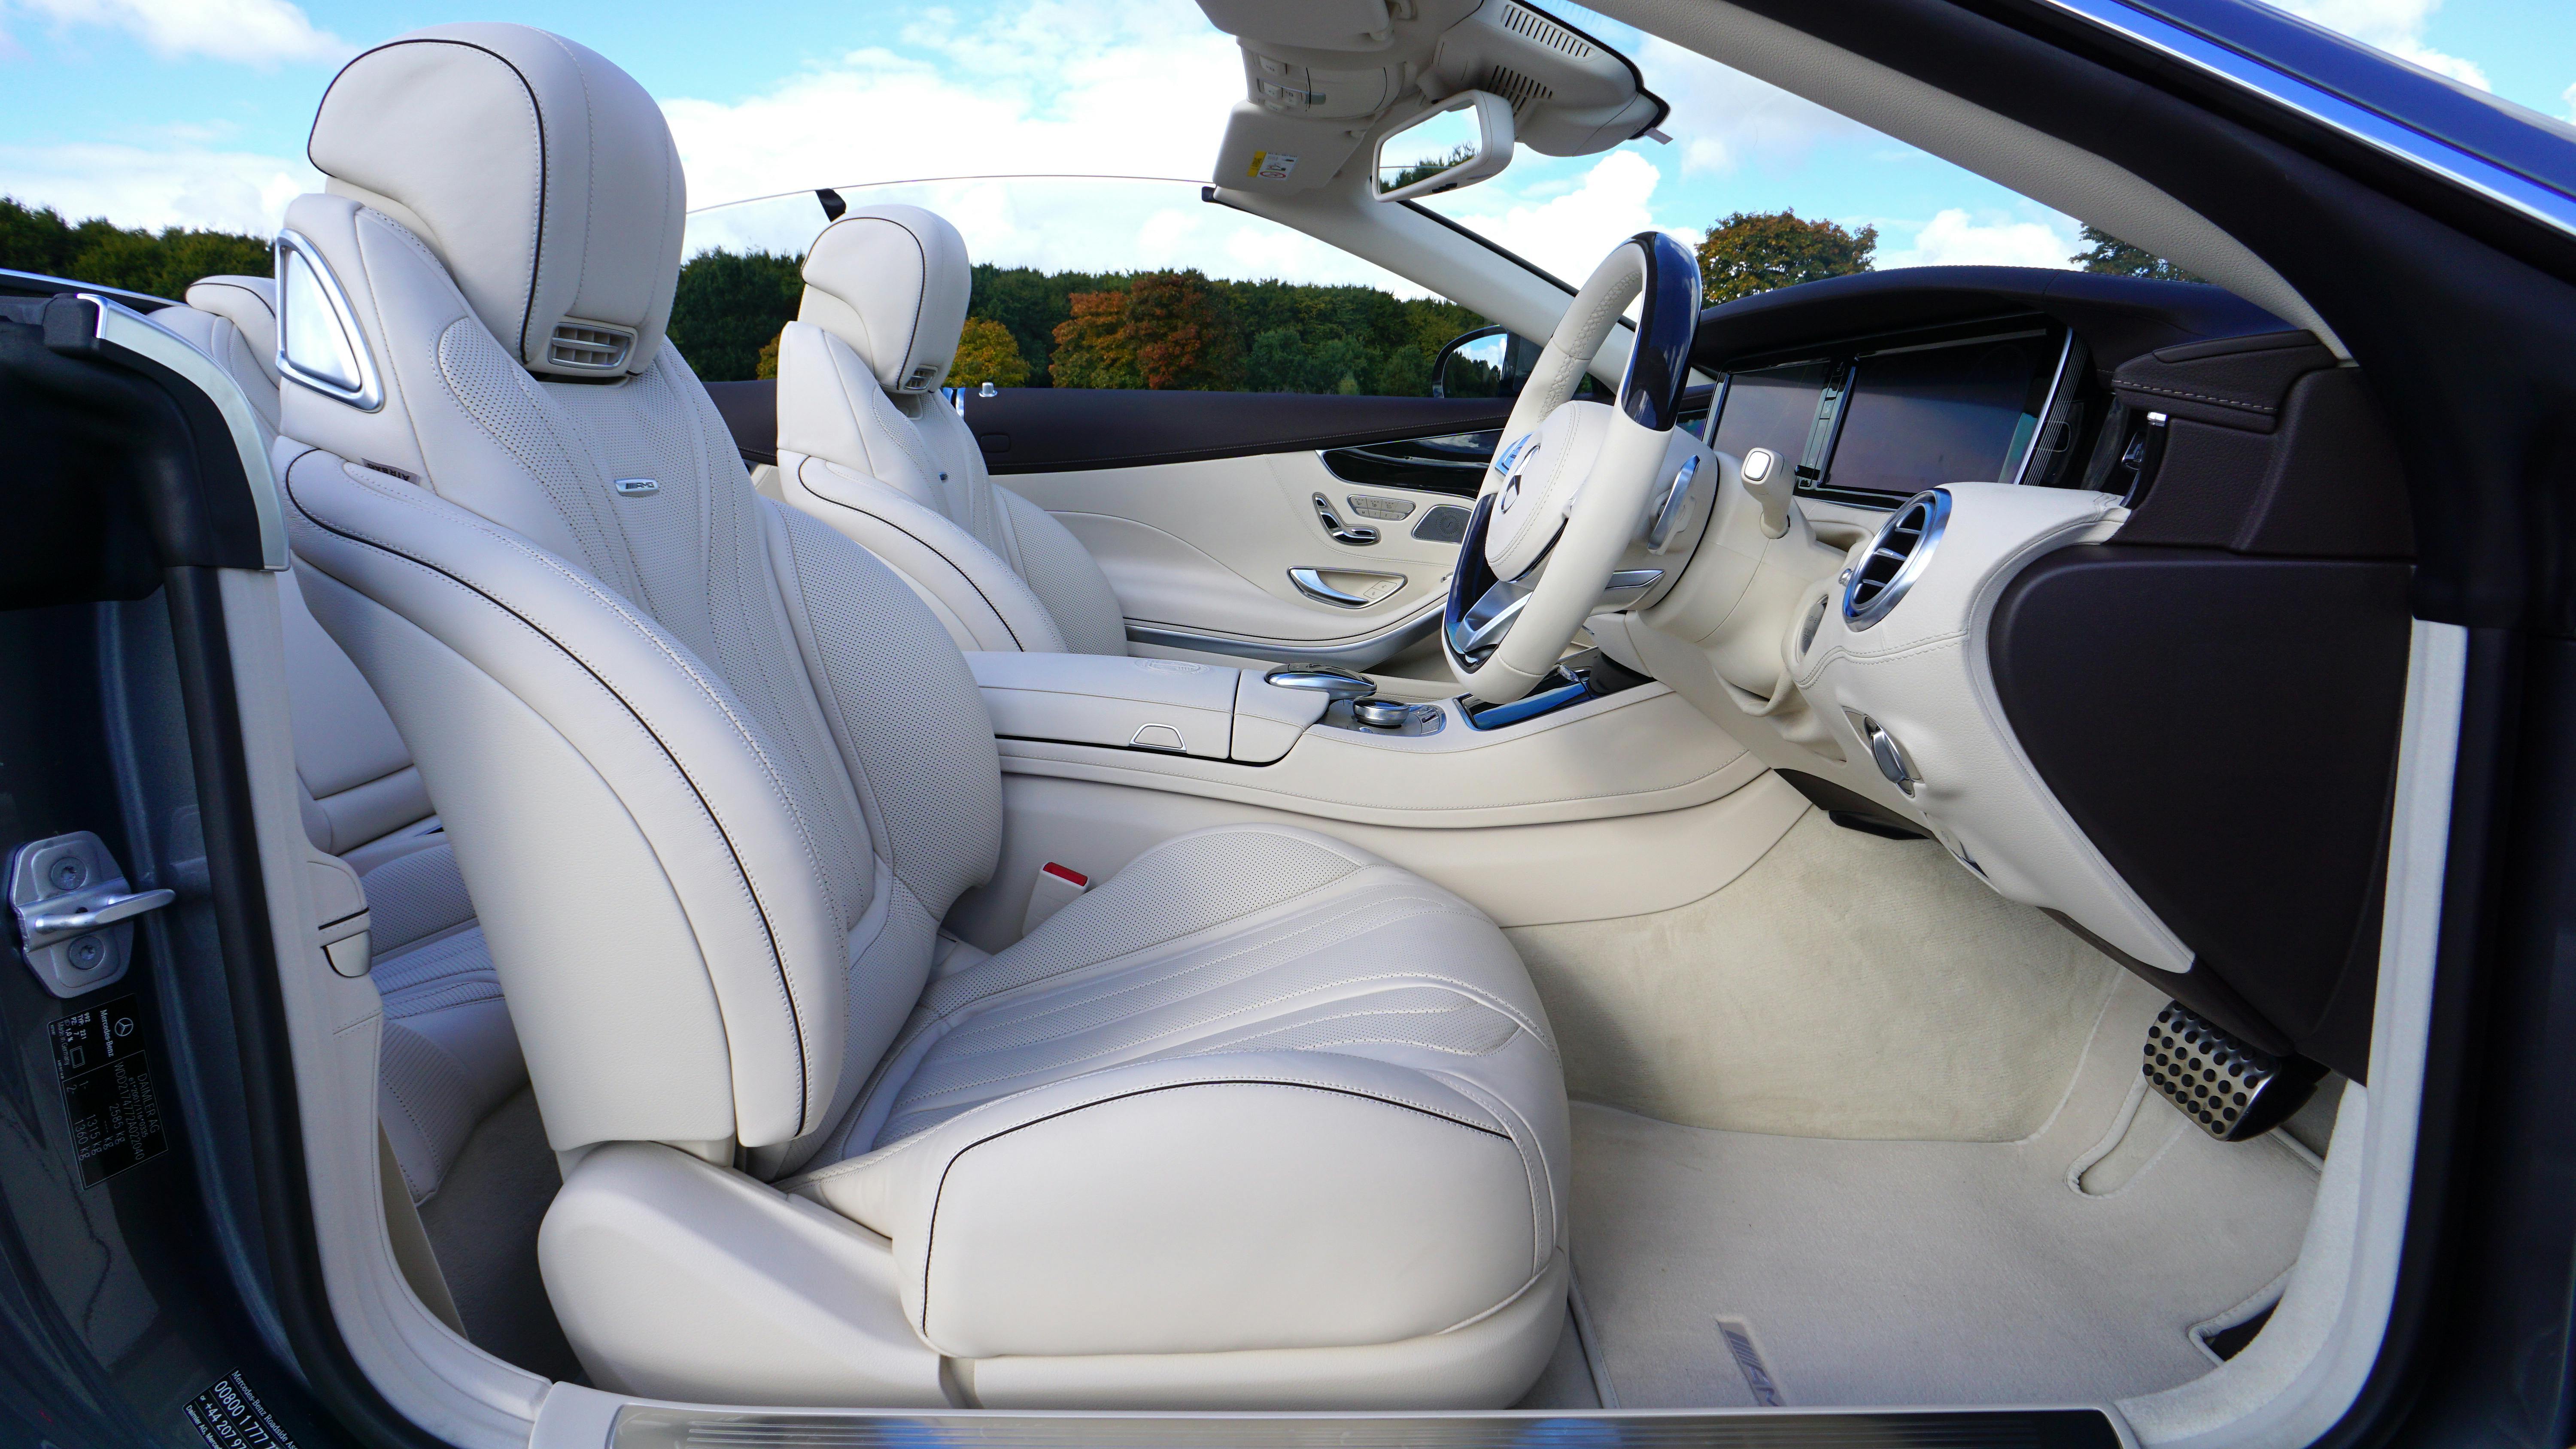 White Leather Car Bucket Seat · Free Stock Photo